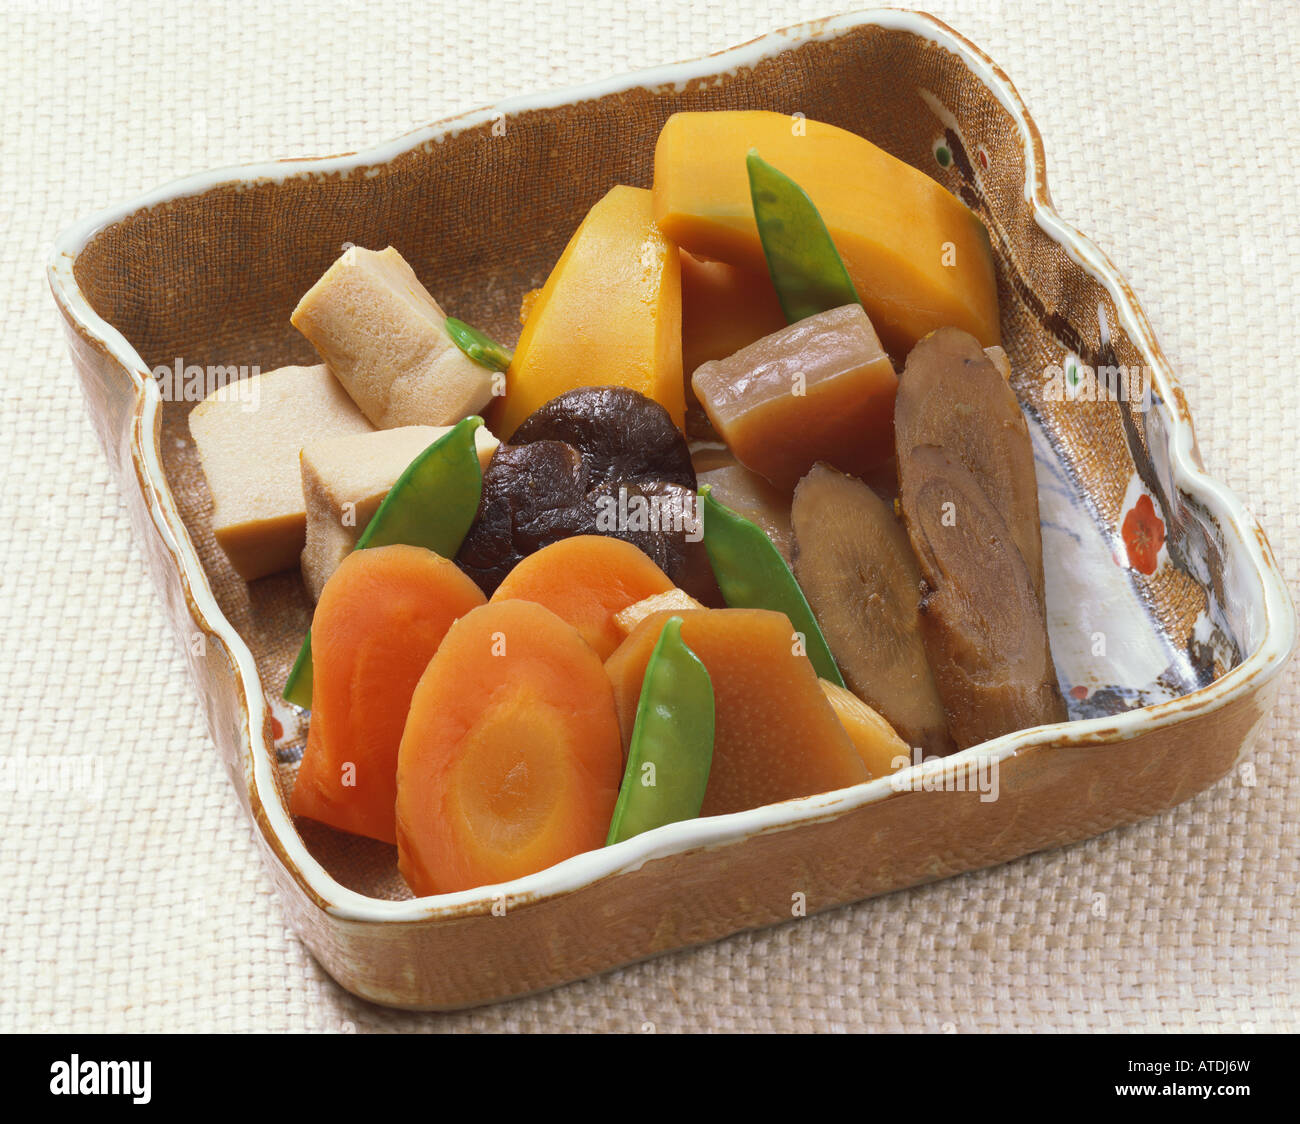 Bowl of Japanese food Stock Photo